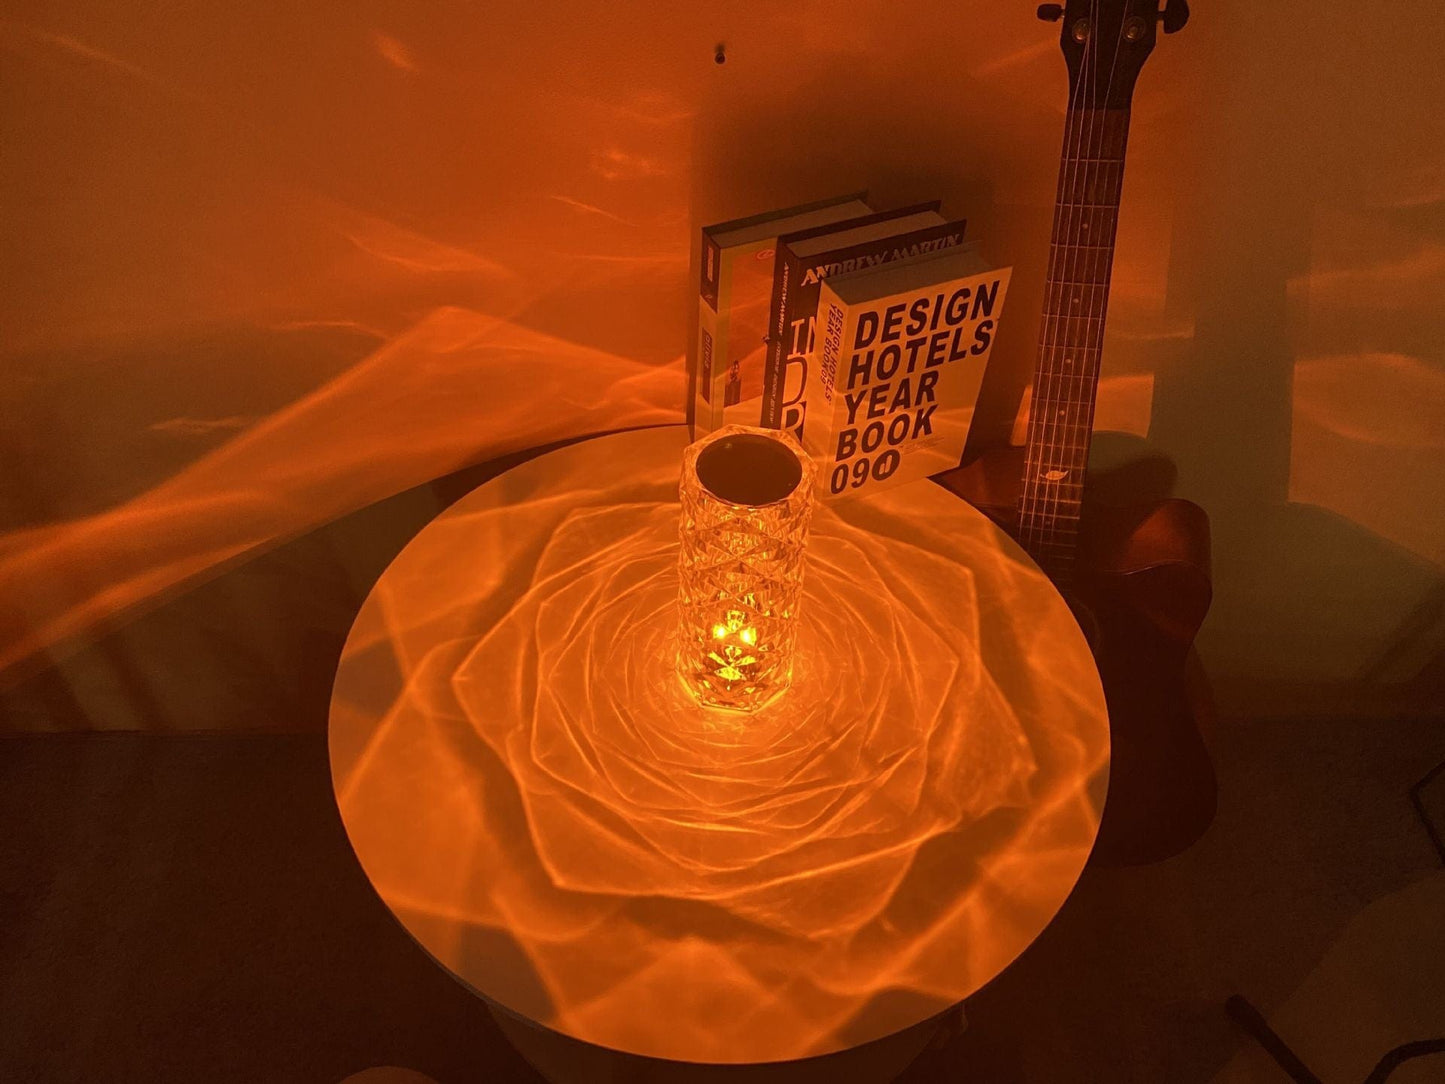 ALLRJ Romantic LED Rose Diamond Table Lamps For Bedroom Living Room Party Dinner Decor Creative Lights